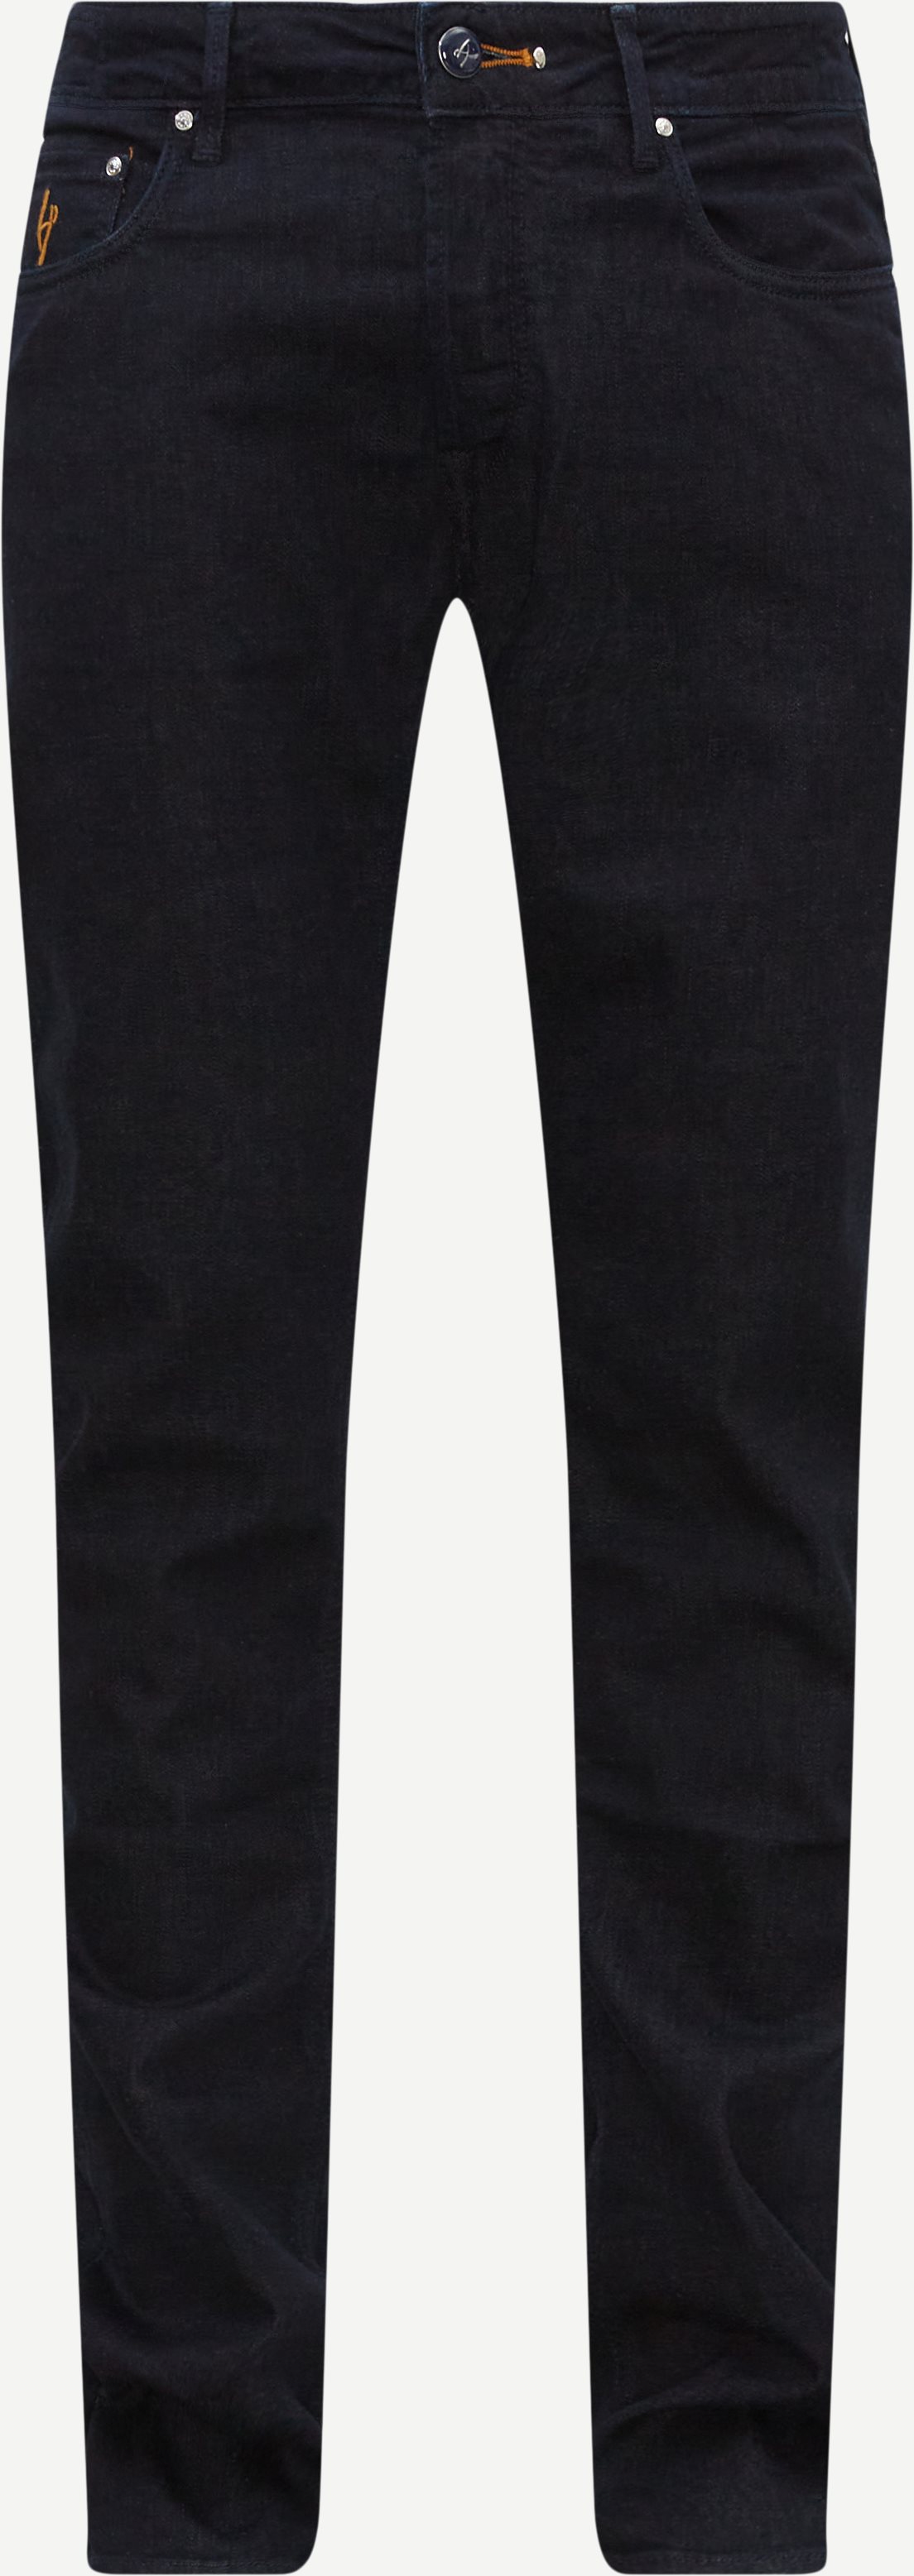 Handpicked Jeans 2845 001 RAVELLO Denim